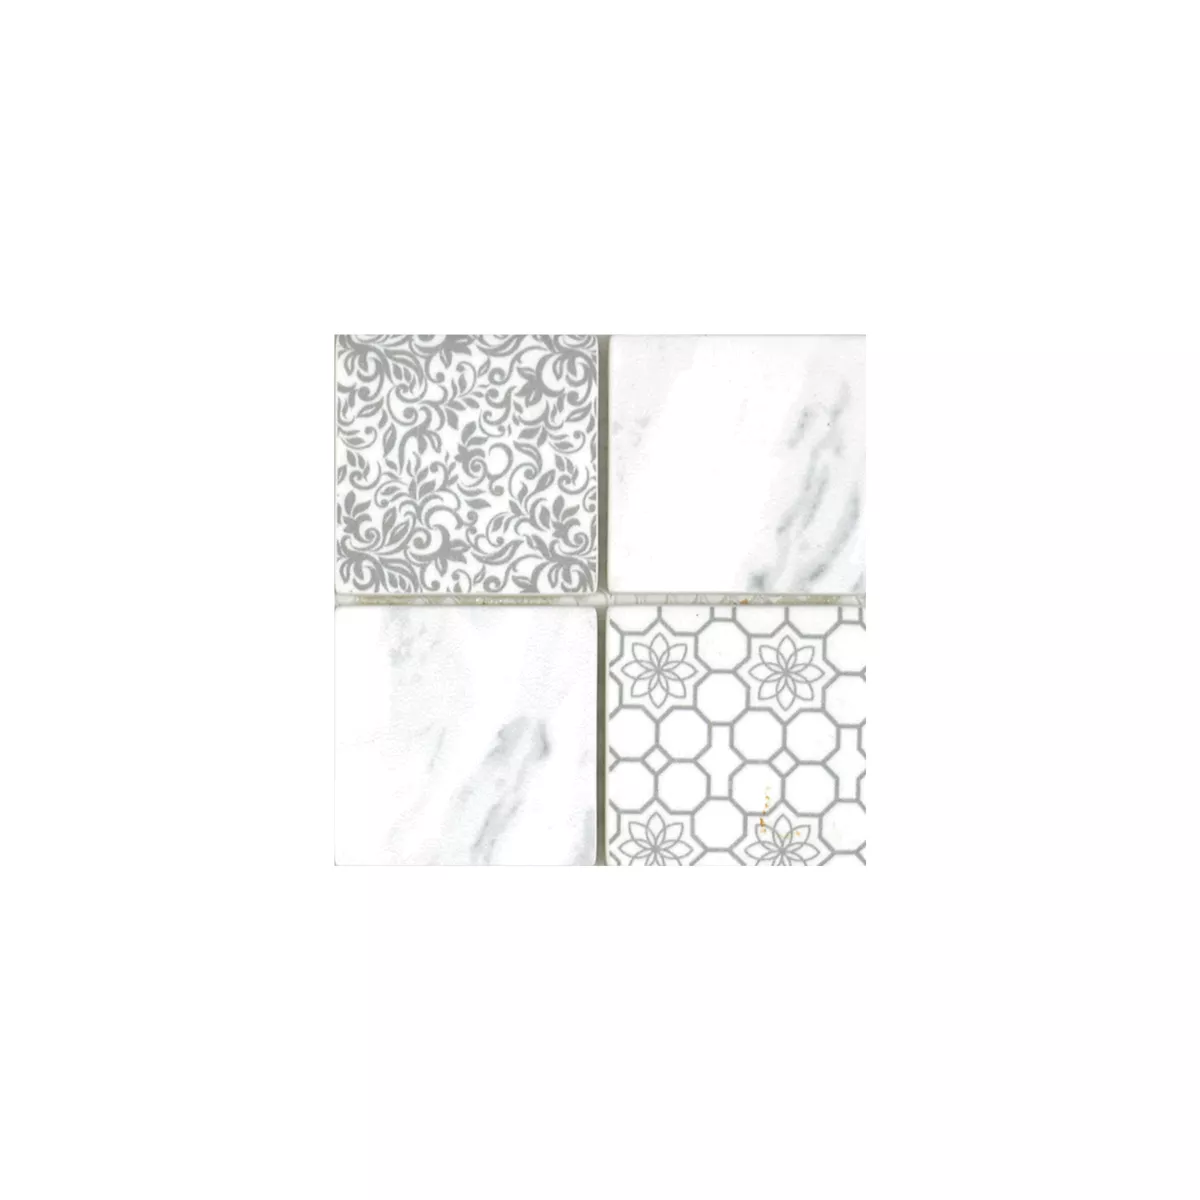 Sample Glass Mosaic Tiles Acapella Carrara Square